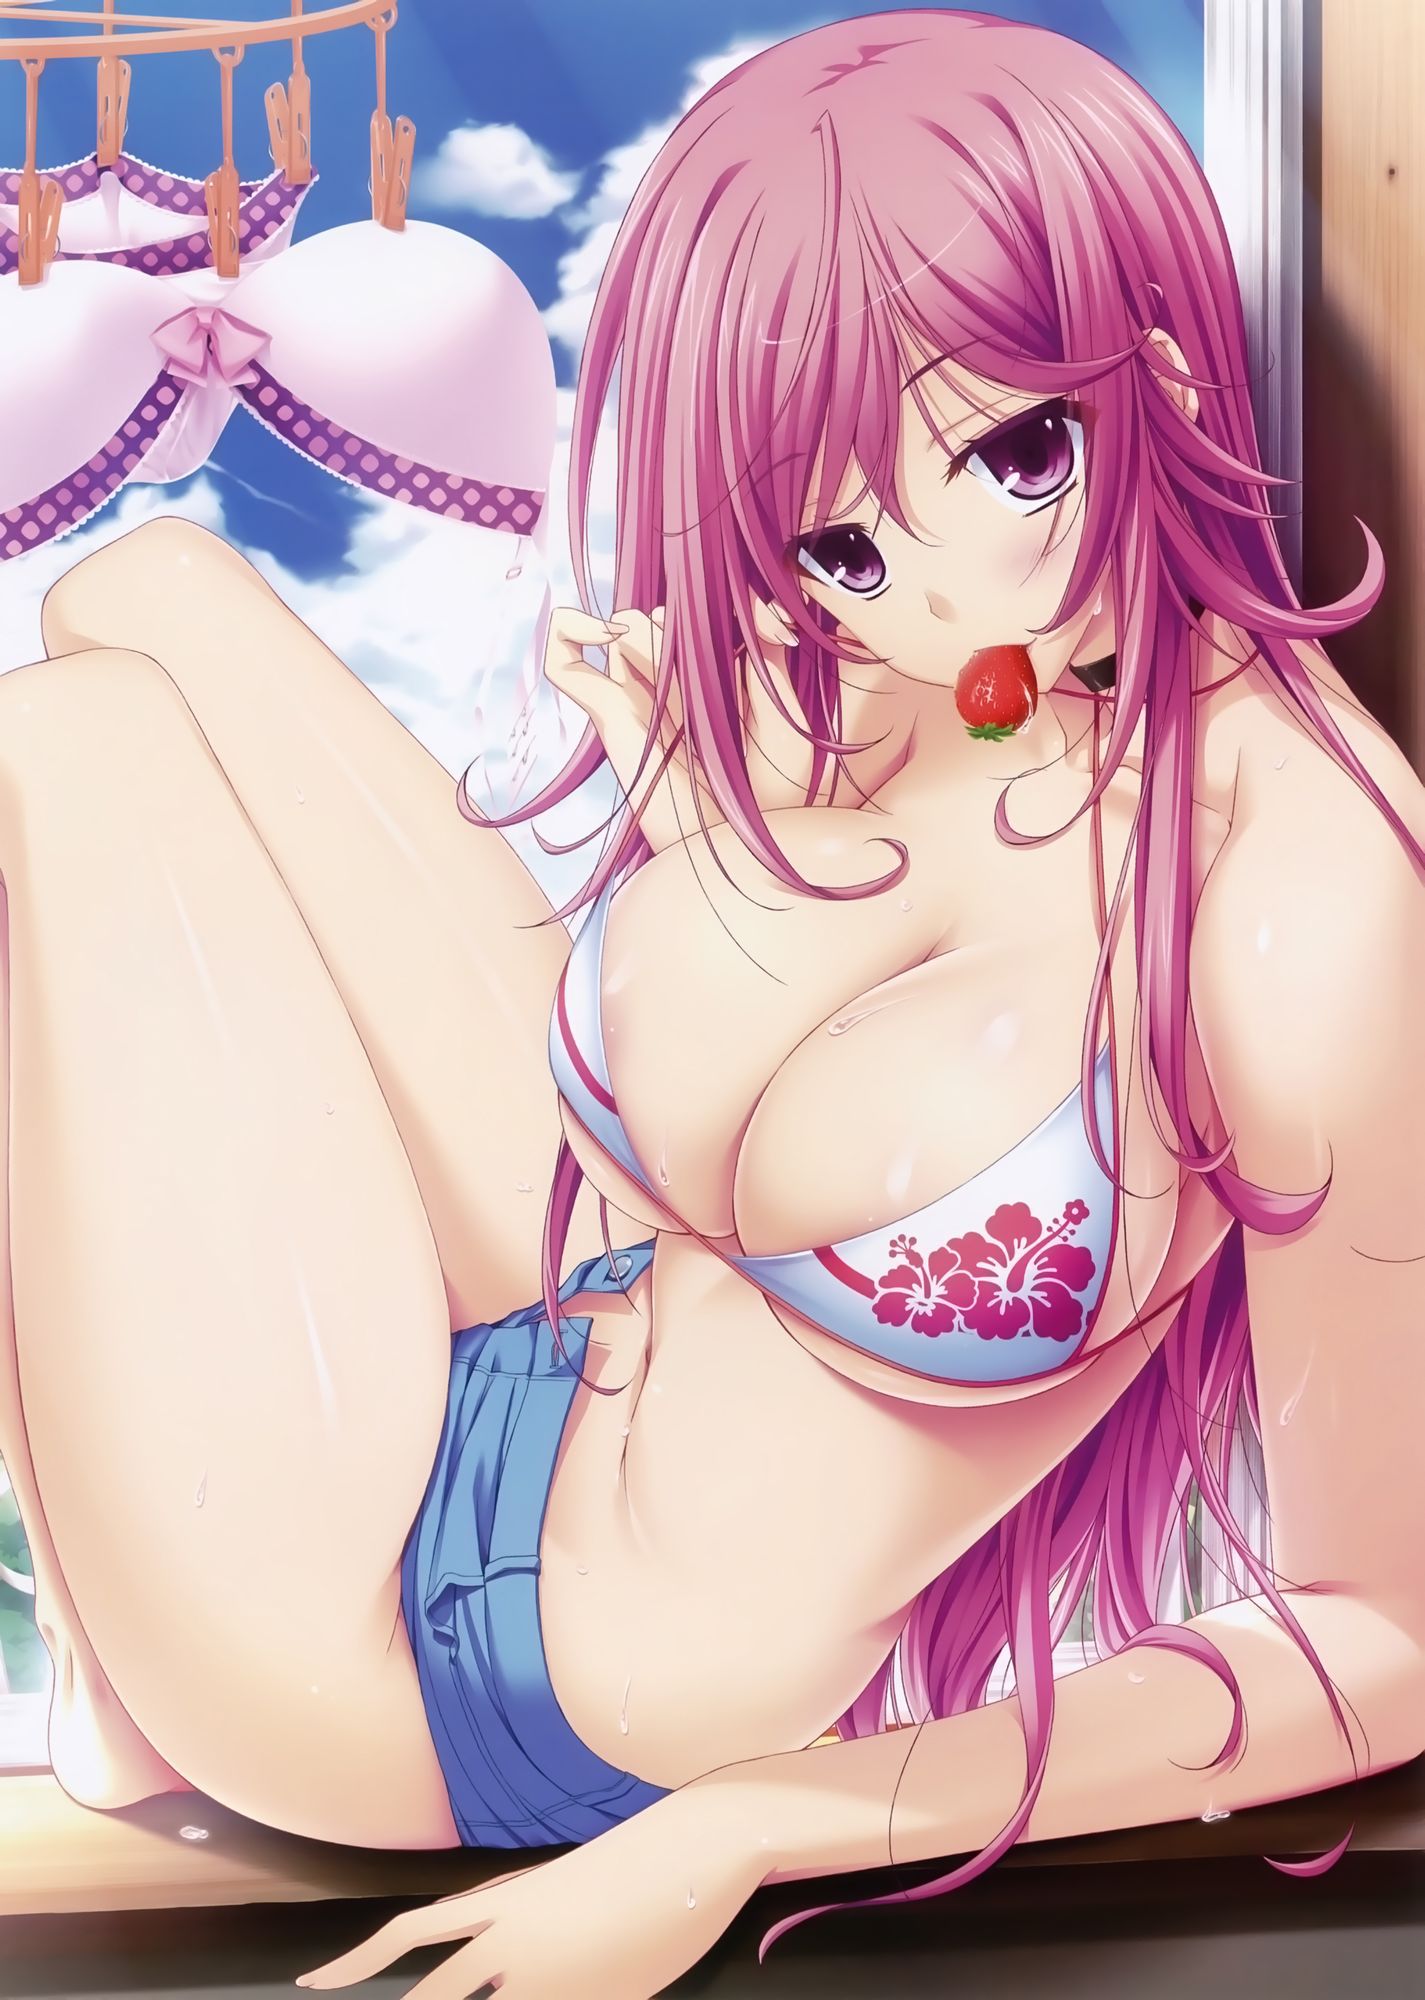 [Secondary/ZIP] Beautiful girl image summary of bikini top rather than bra 34